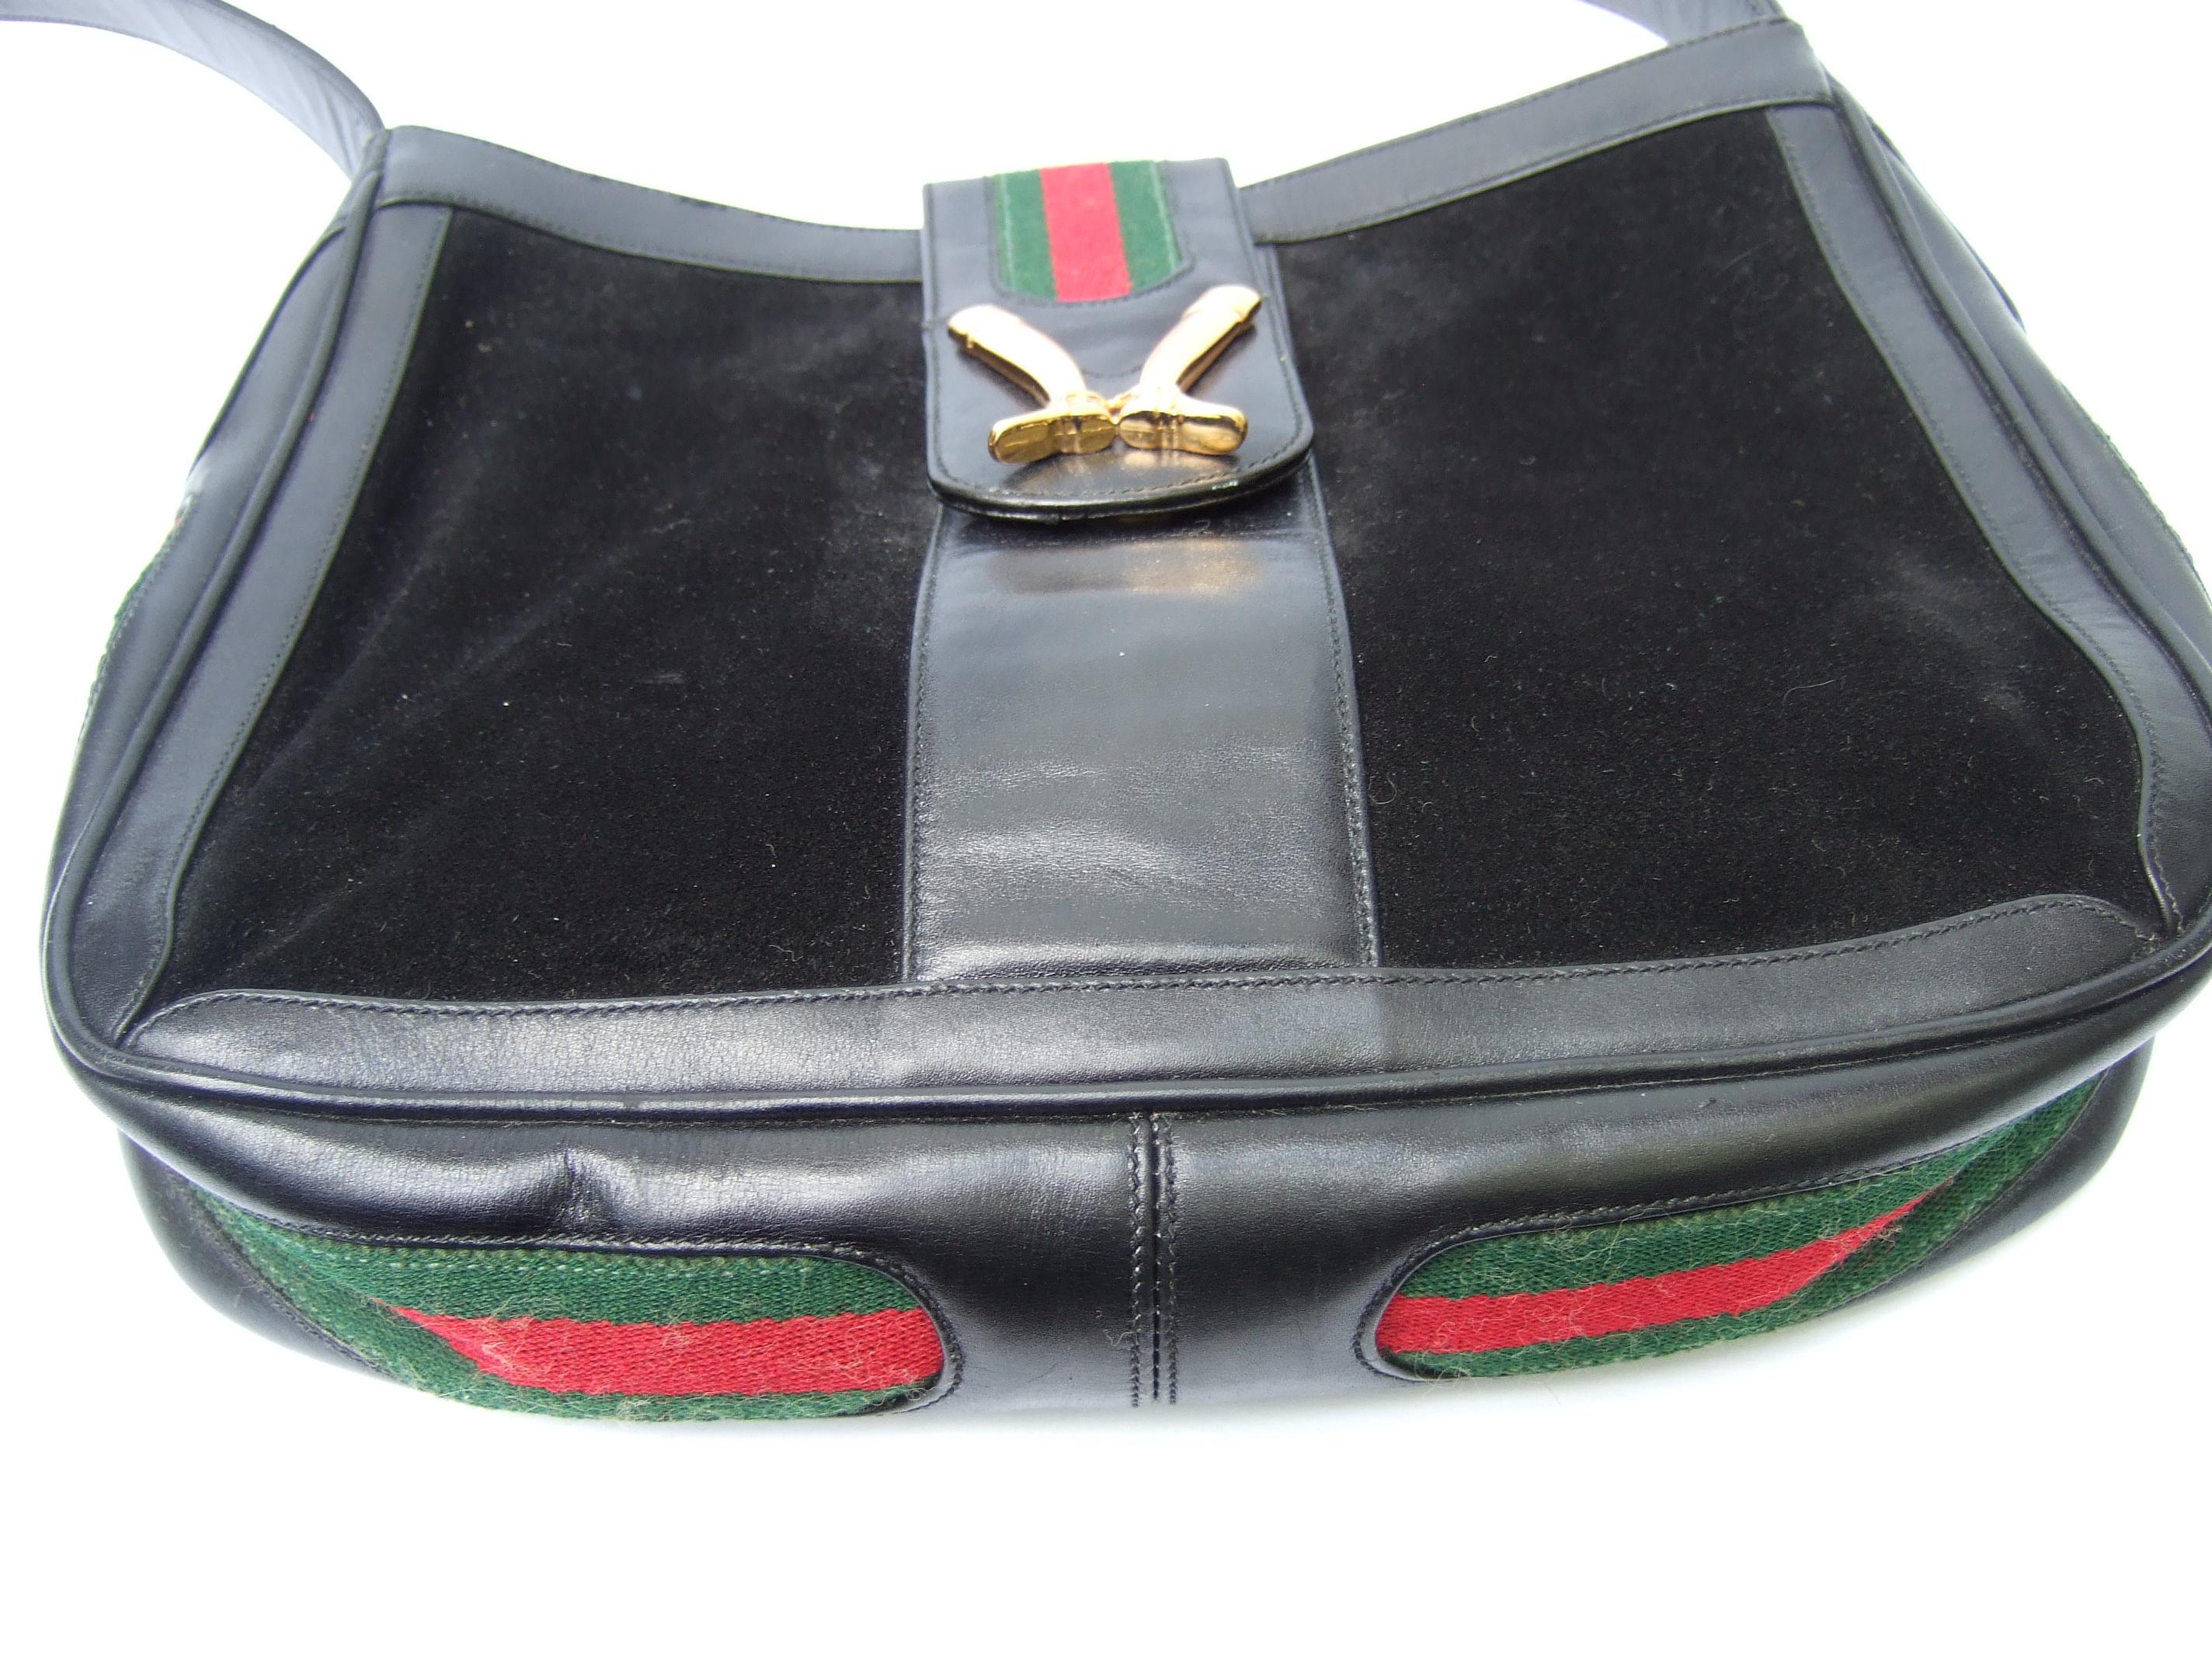 Gucci Italy Rare Black Suede Boot Emblem Shoulder Bag c 1970s For Sale 7